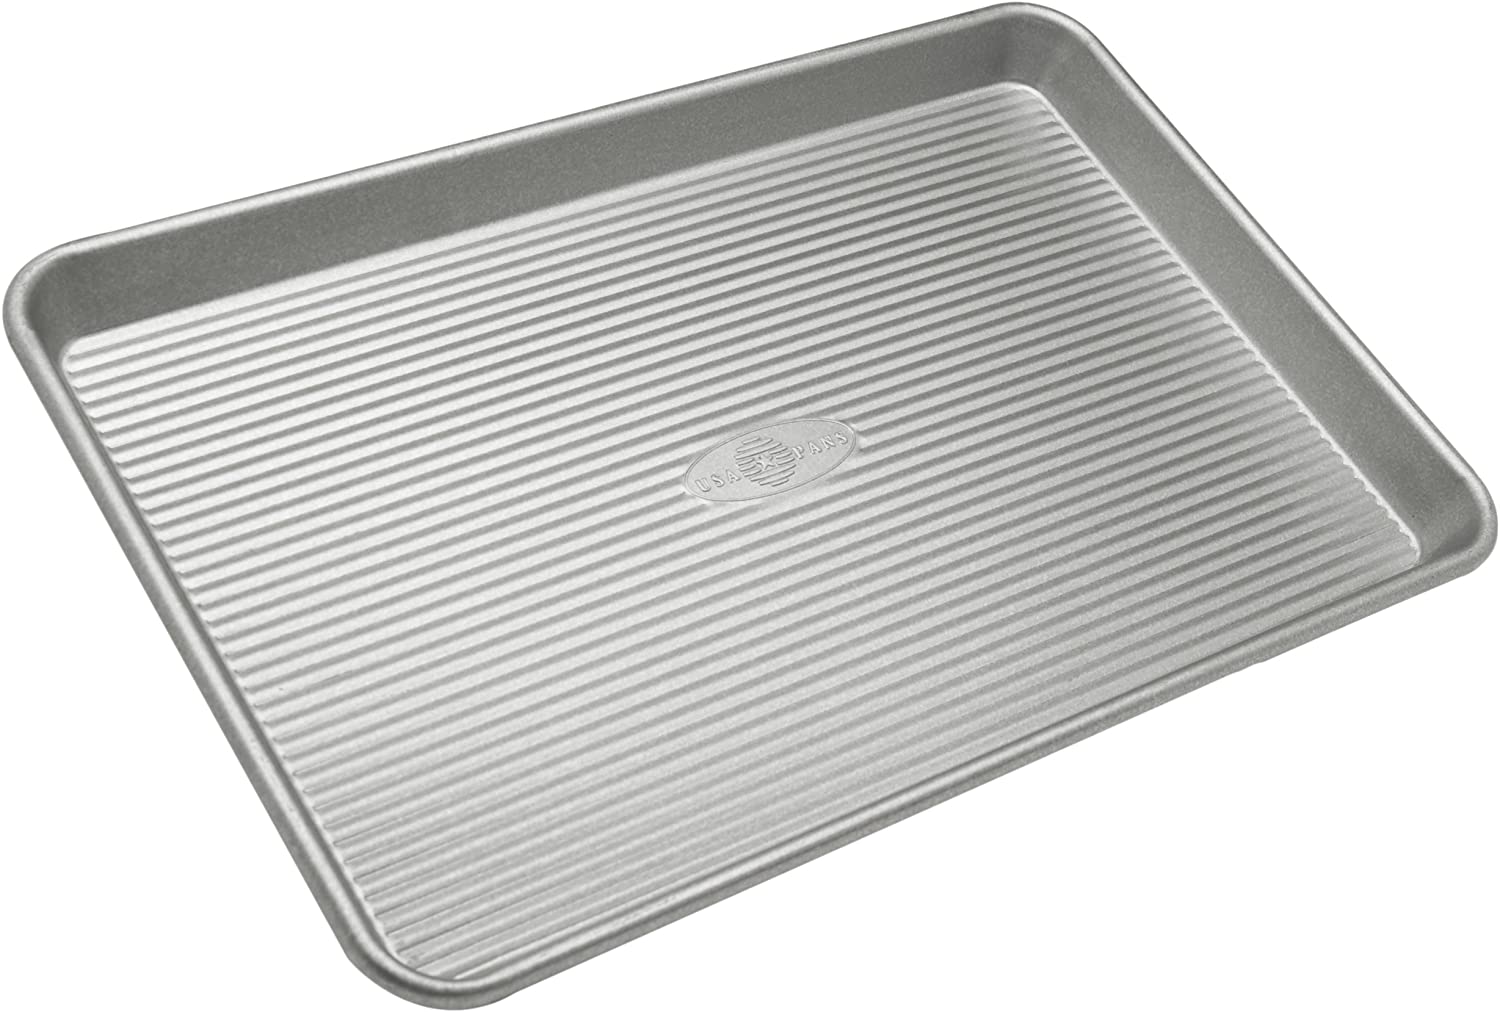 USA PAN Aluminized Steel Lasagna Pan, Silver